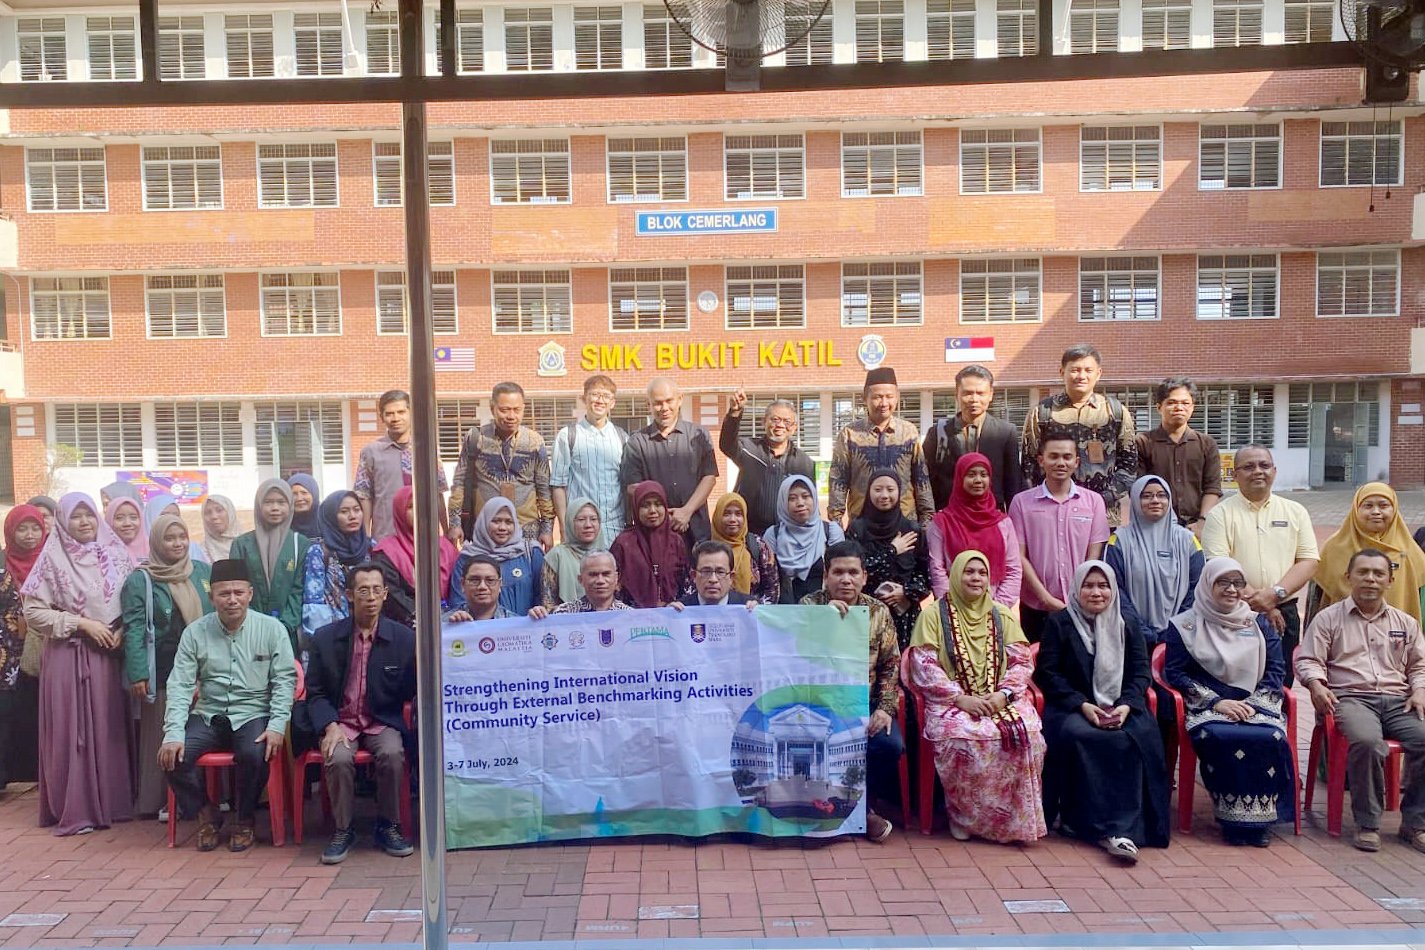 Dosen UNIDA Kunjungi Sekolah Menengah Kebangsaan Bukit Katil Malaysia, Laksanakan Pengabdian Masyarakat Internasional